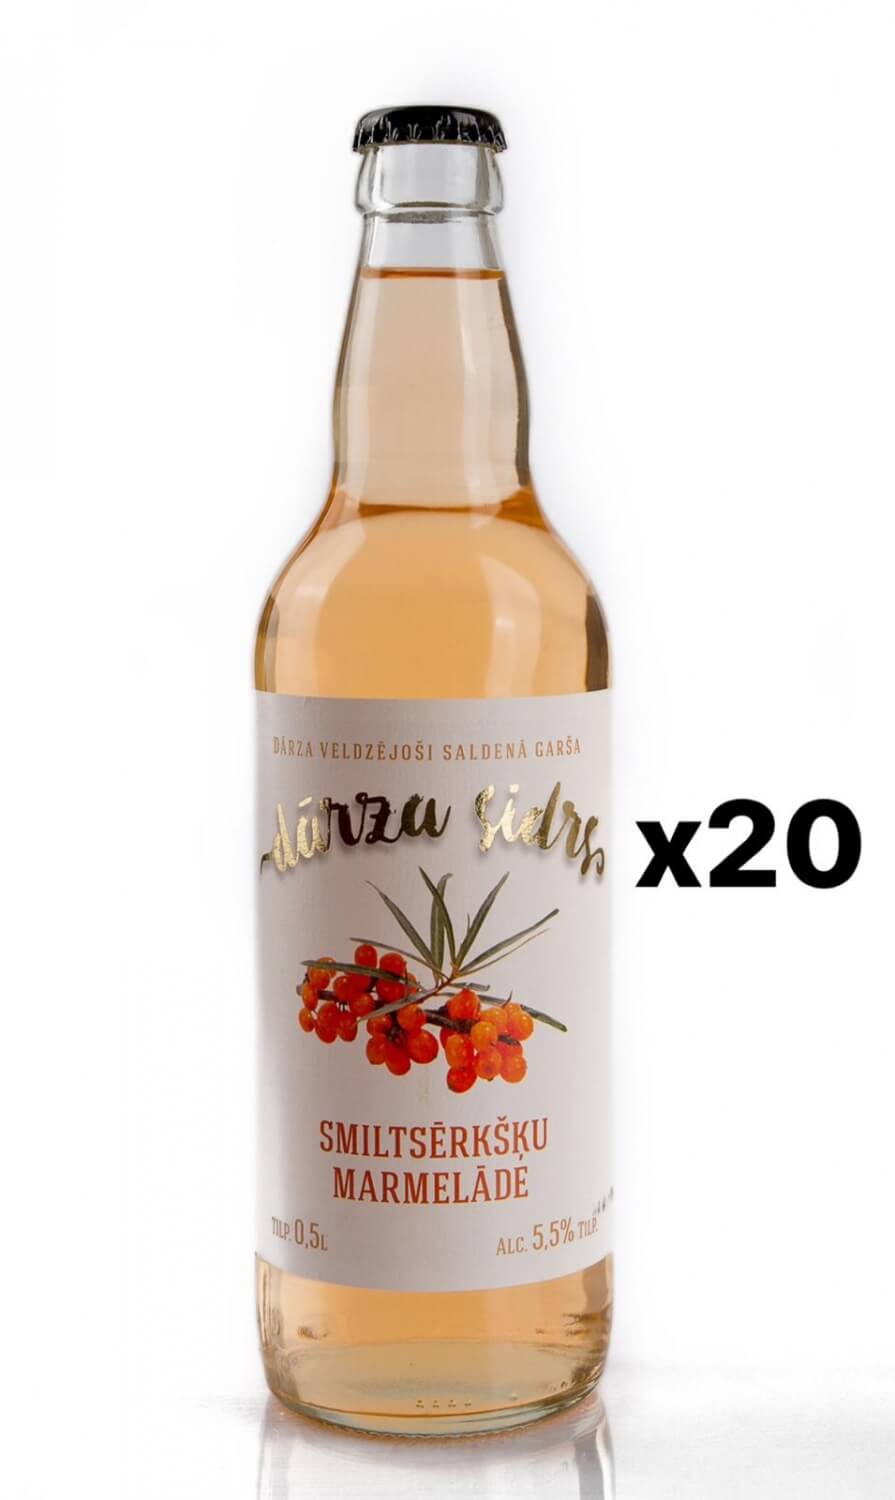 Dārza Cider Buckthorn Marmalade 5.5% 20x50cl